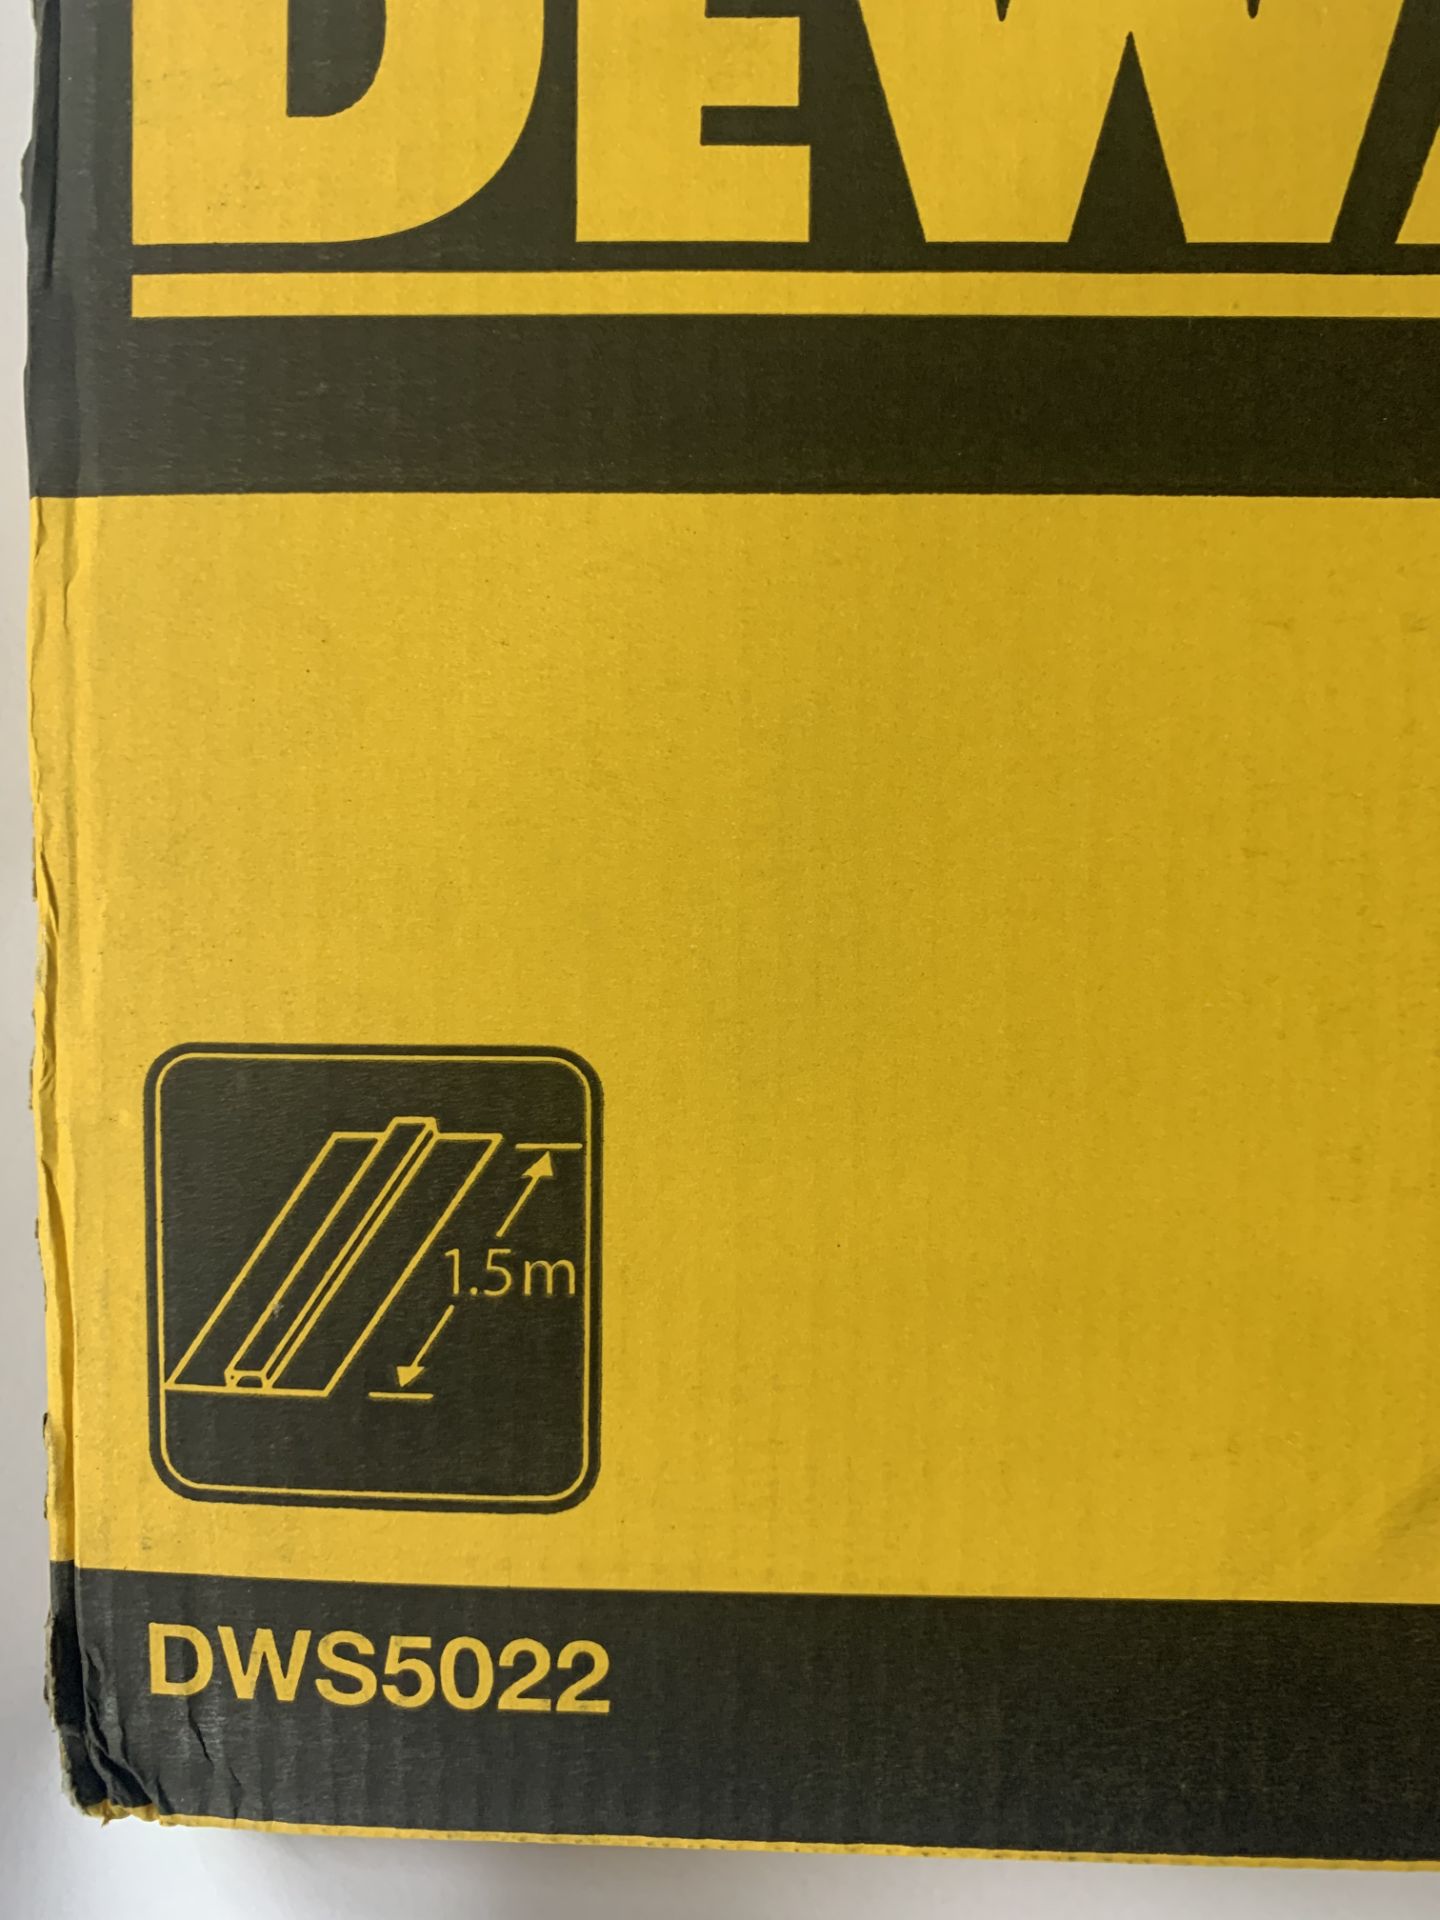 DEWALT DWS5022 Plunge Saw Guide Rail 1.5m - Image 3 of 3